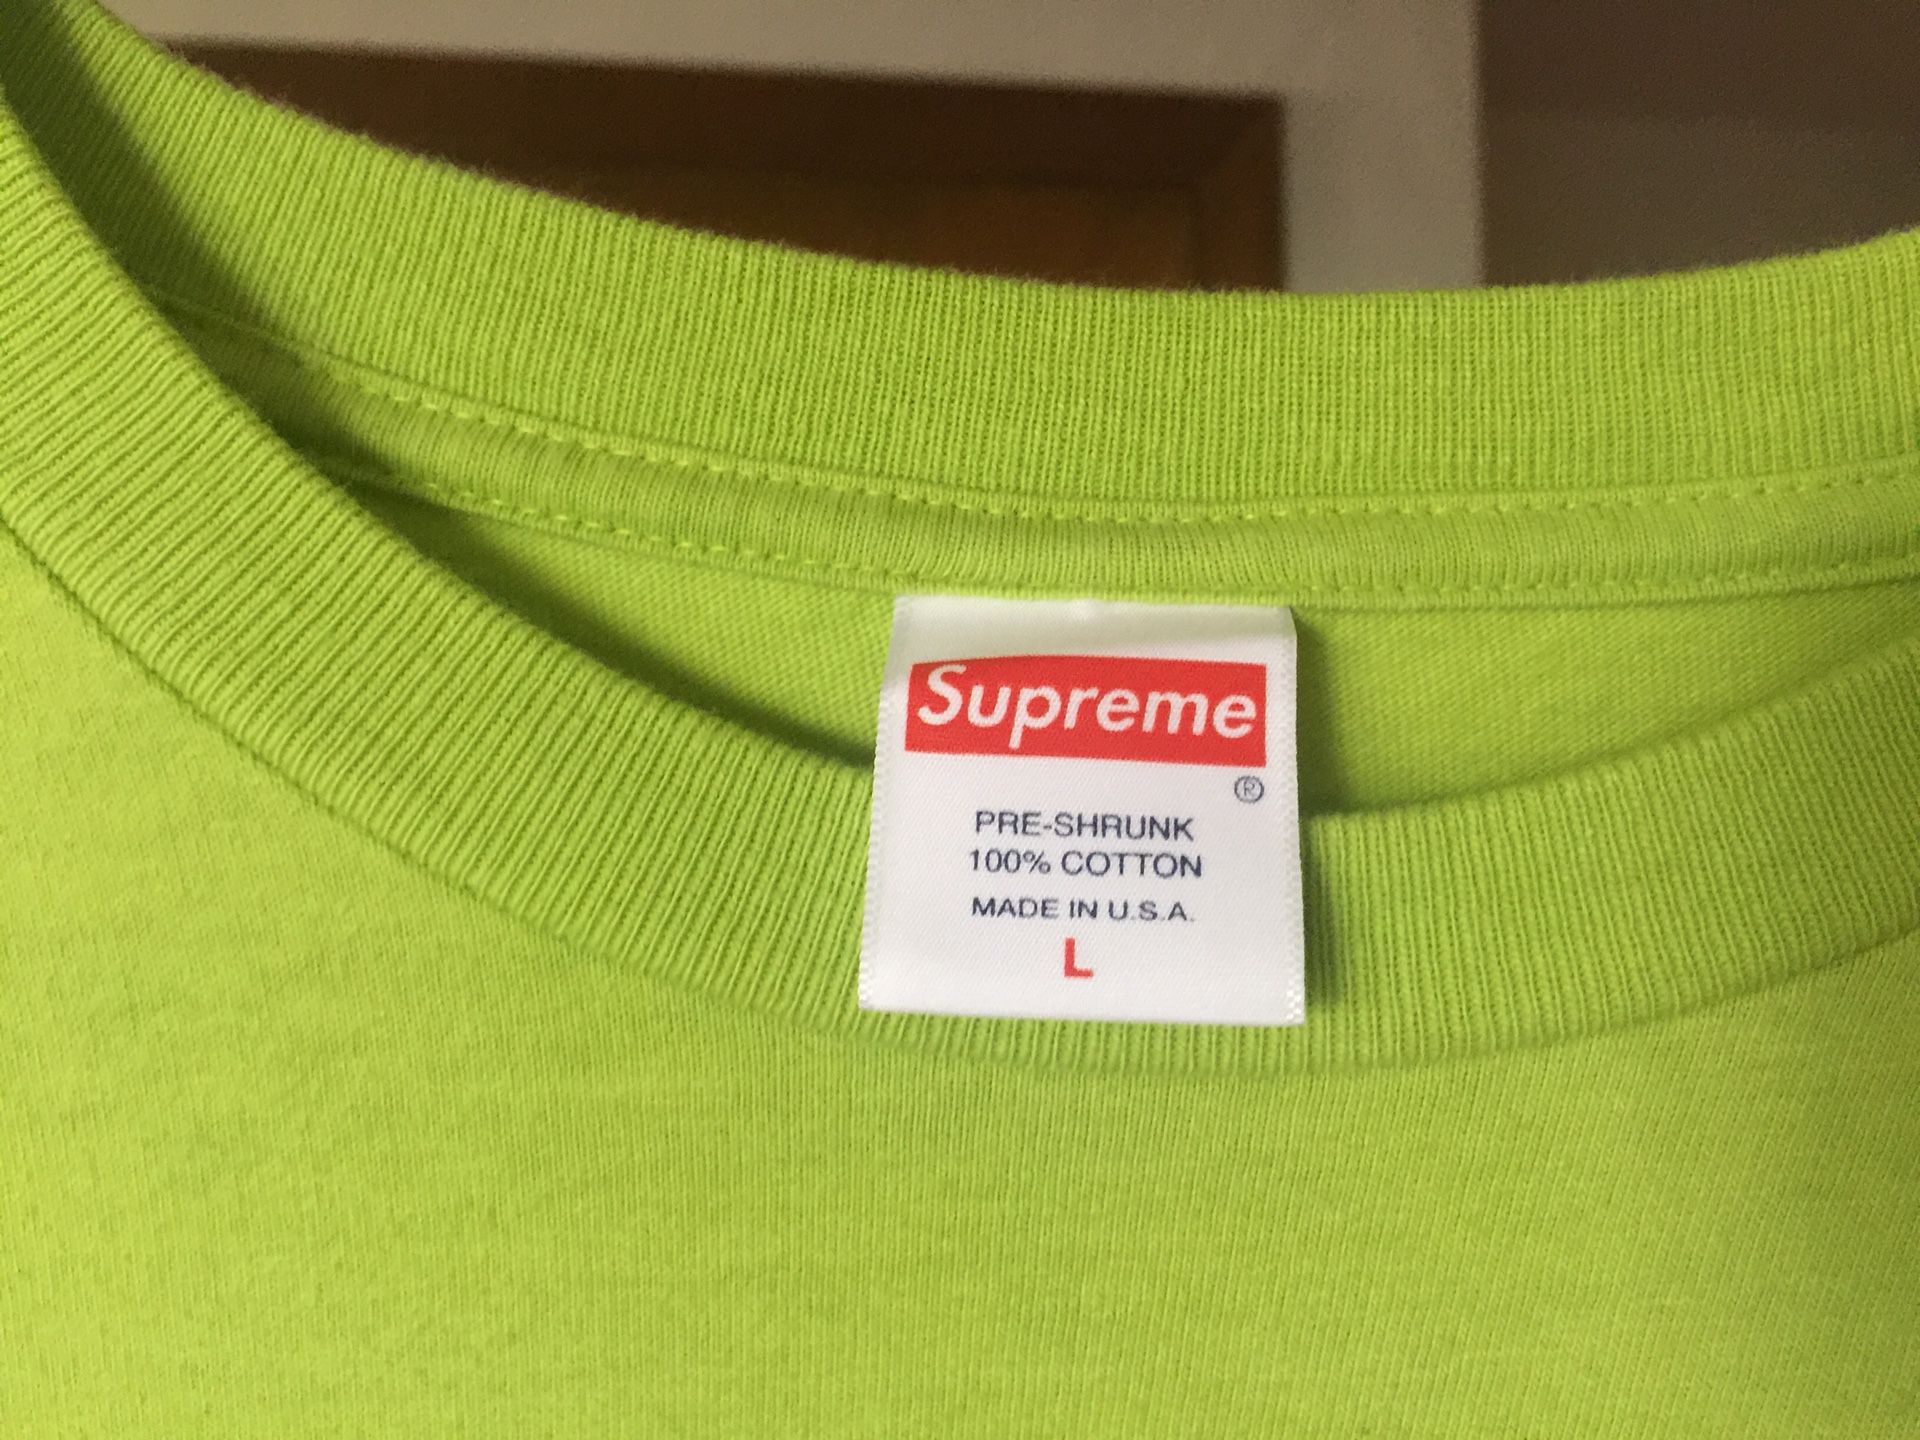 Supreme bloom lime sweater shirt large